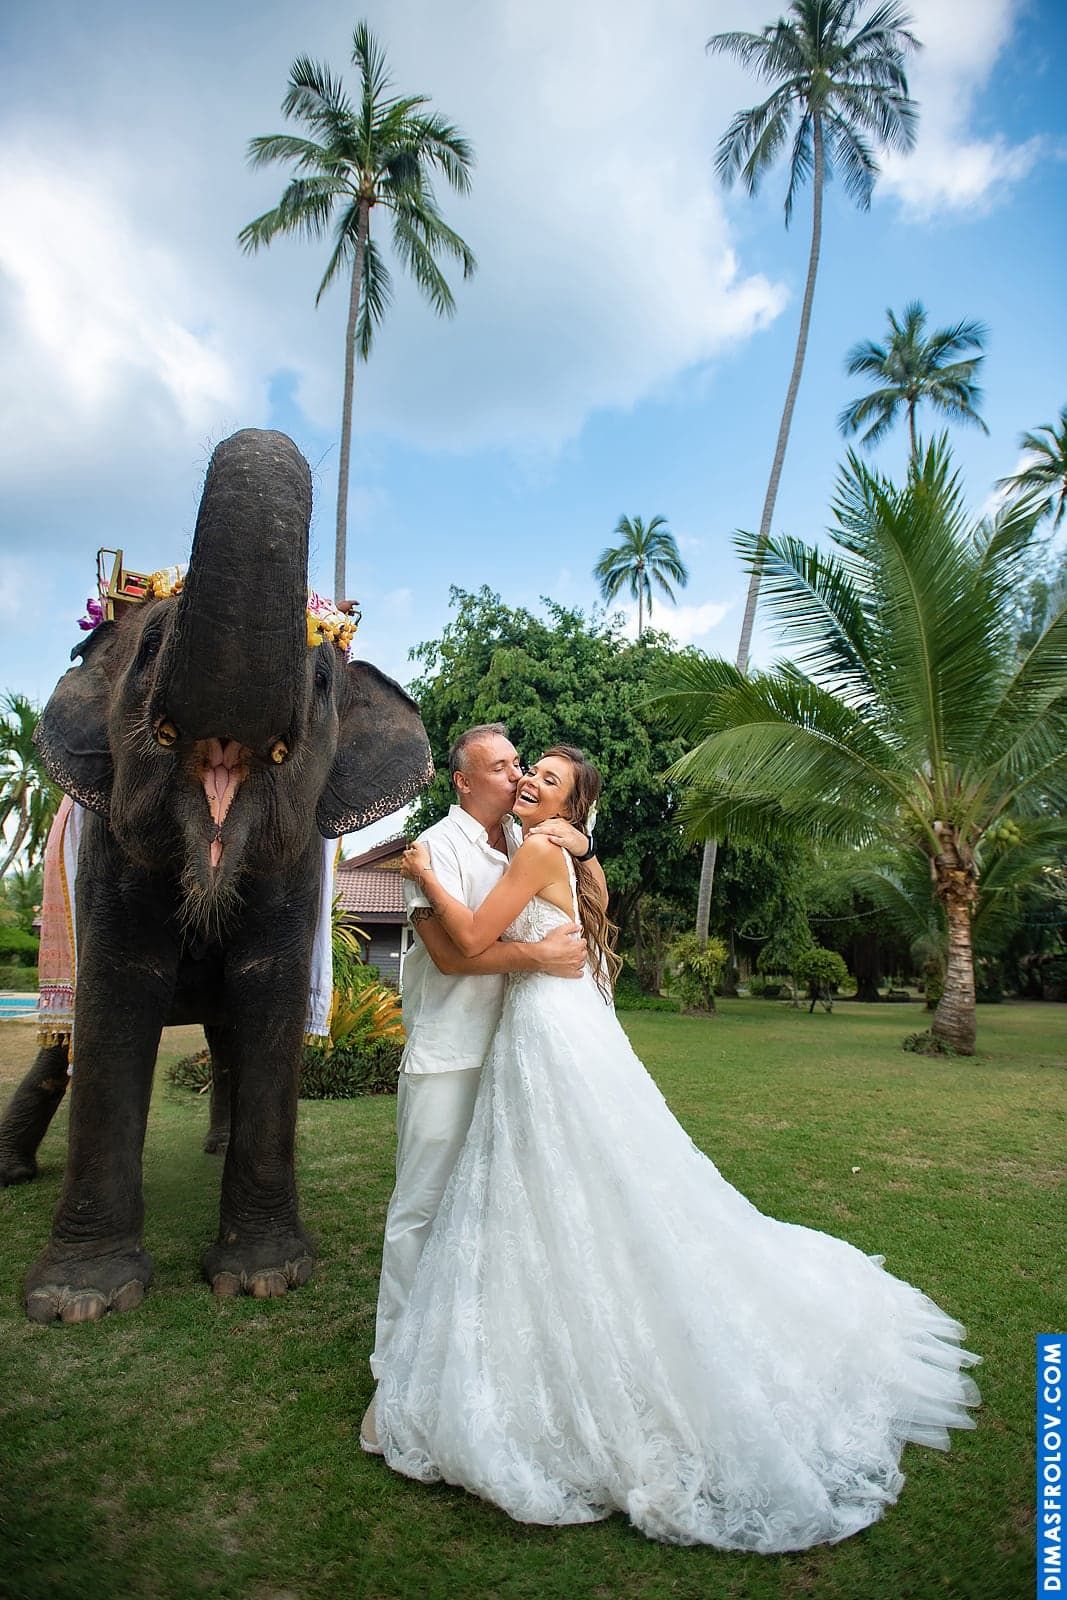 Photo shoot with an elephant on Koh Samui. photographer Dimas Frolov. photo1735